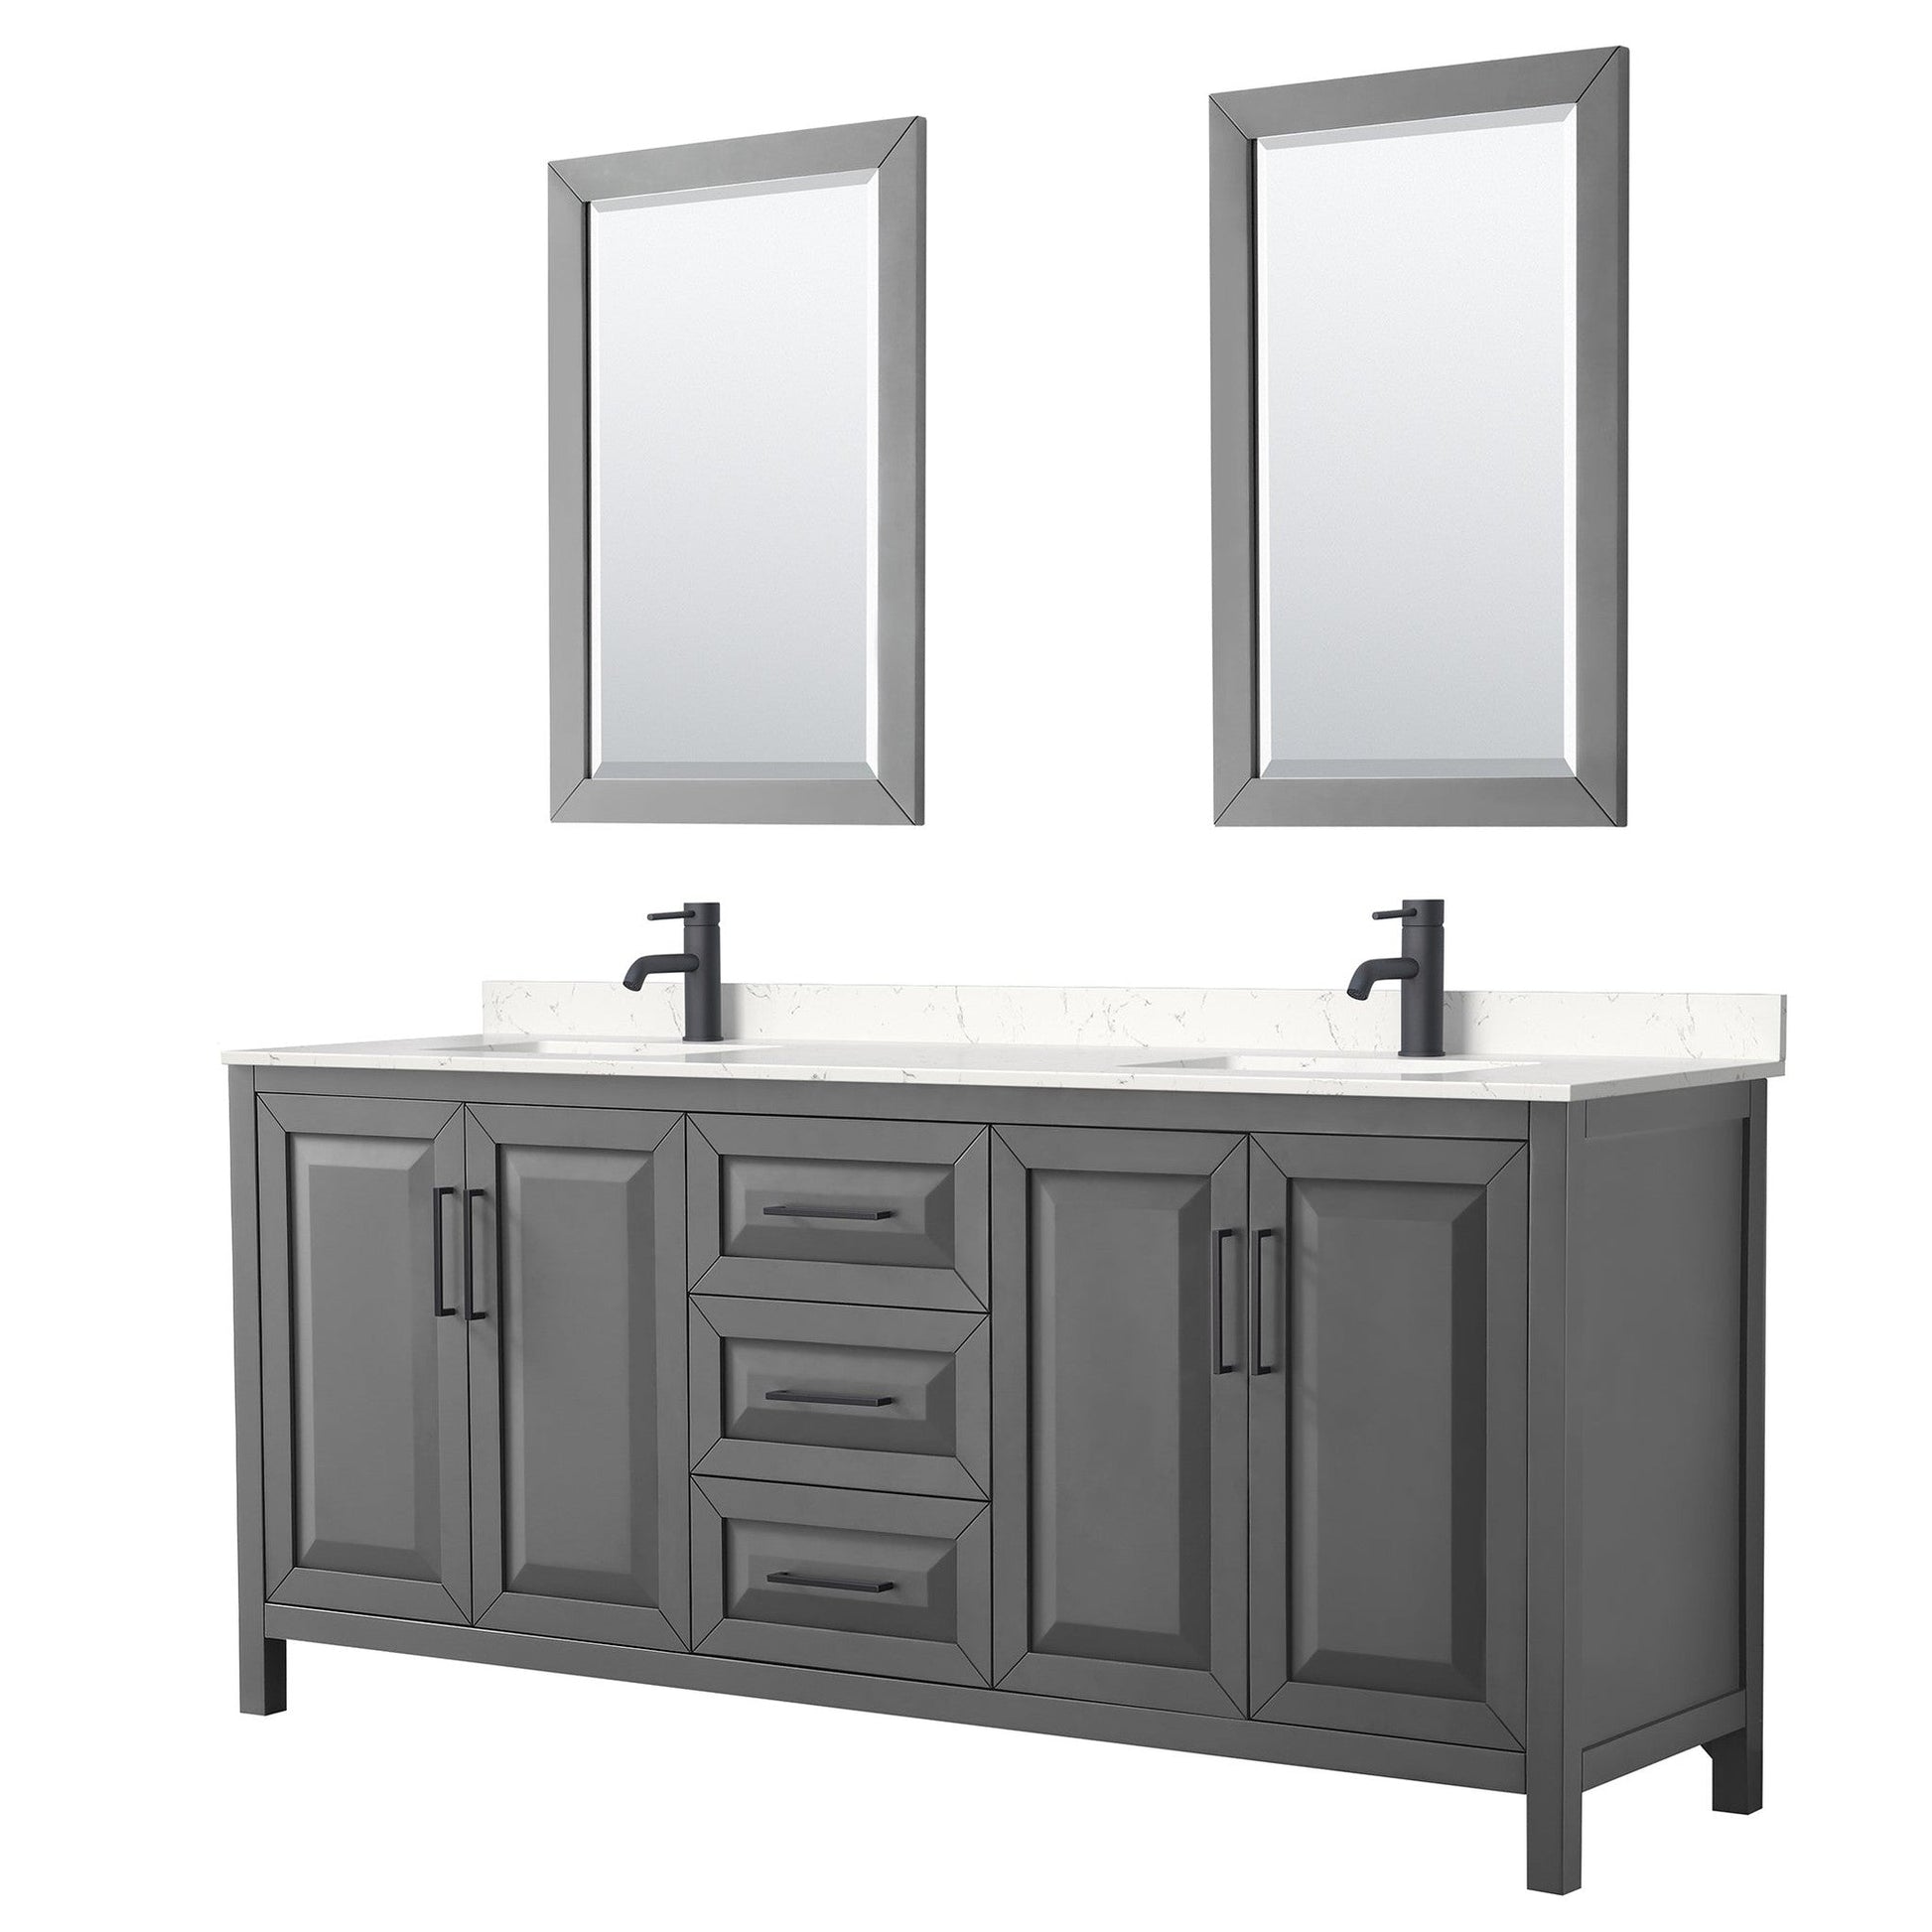 Daria 80" Double Bathroom Vanity in Dark Gray, Carrara Cultured Marble Countertop, Undermount Square Sinks, Matte Black Trim, 24" Mirrors